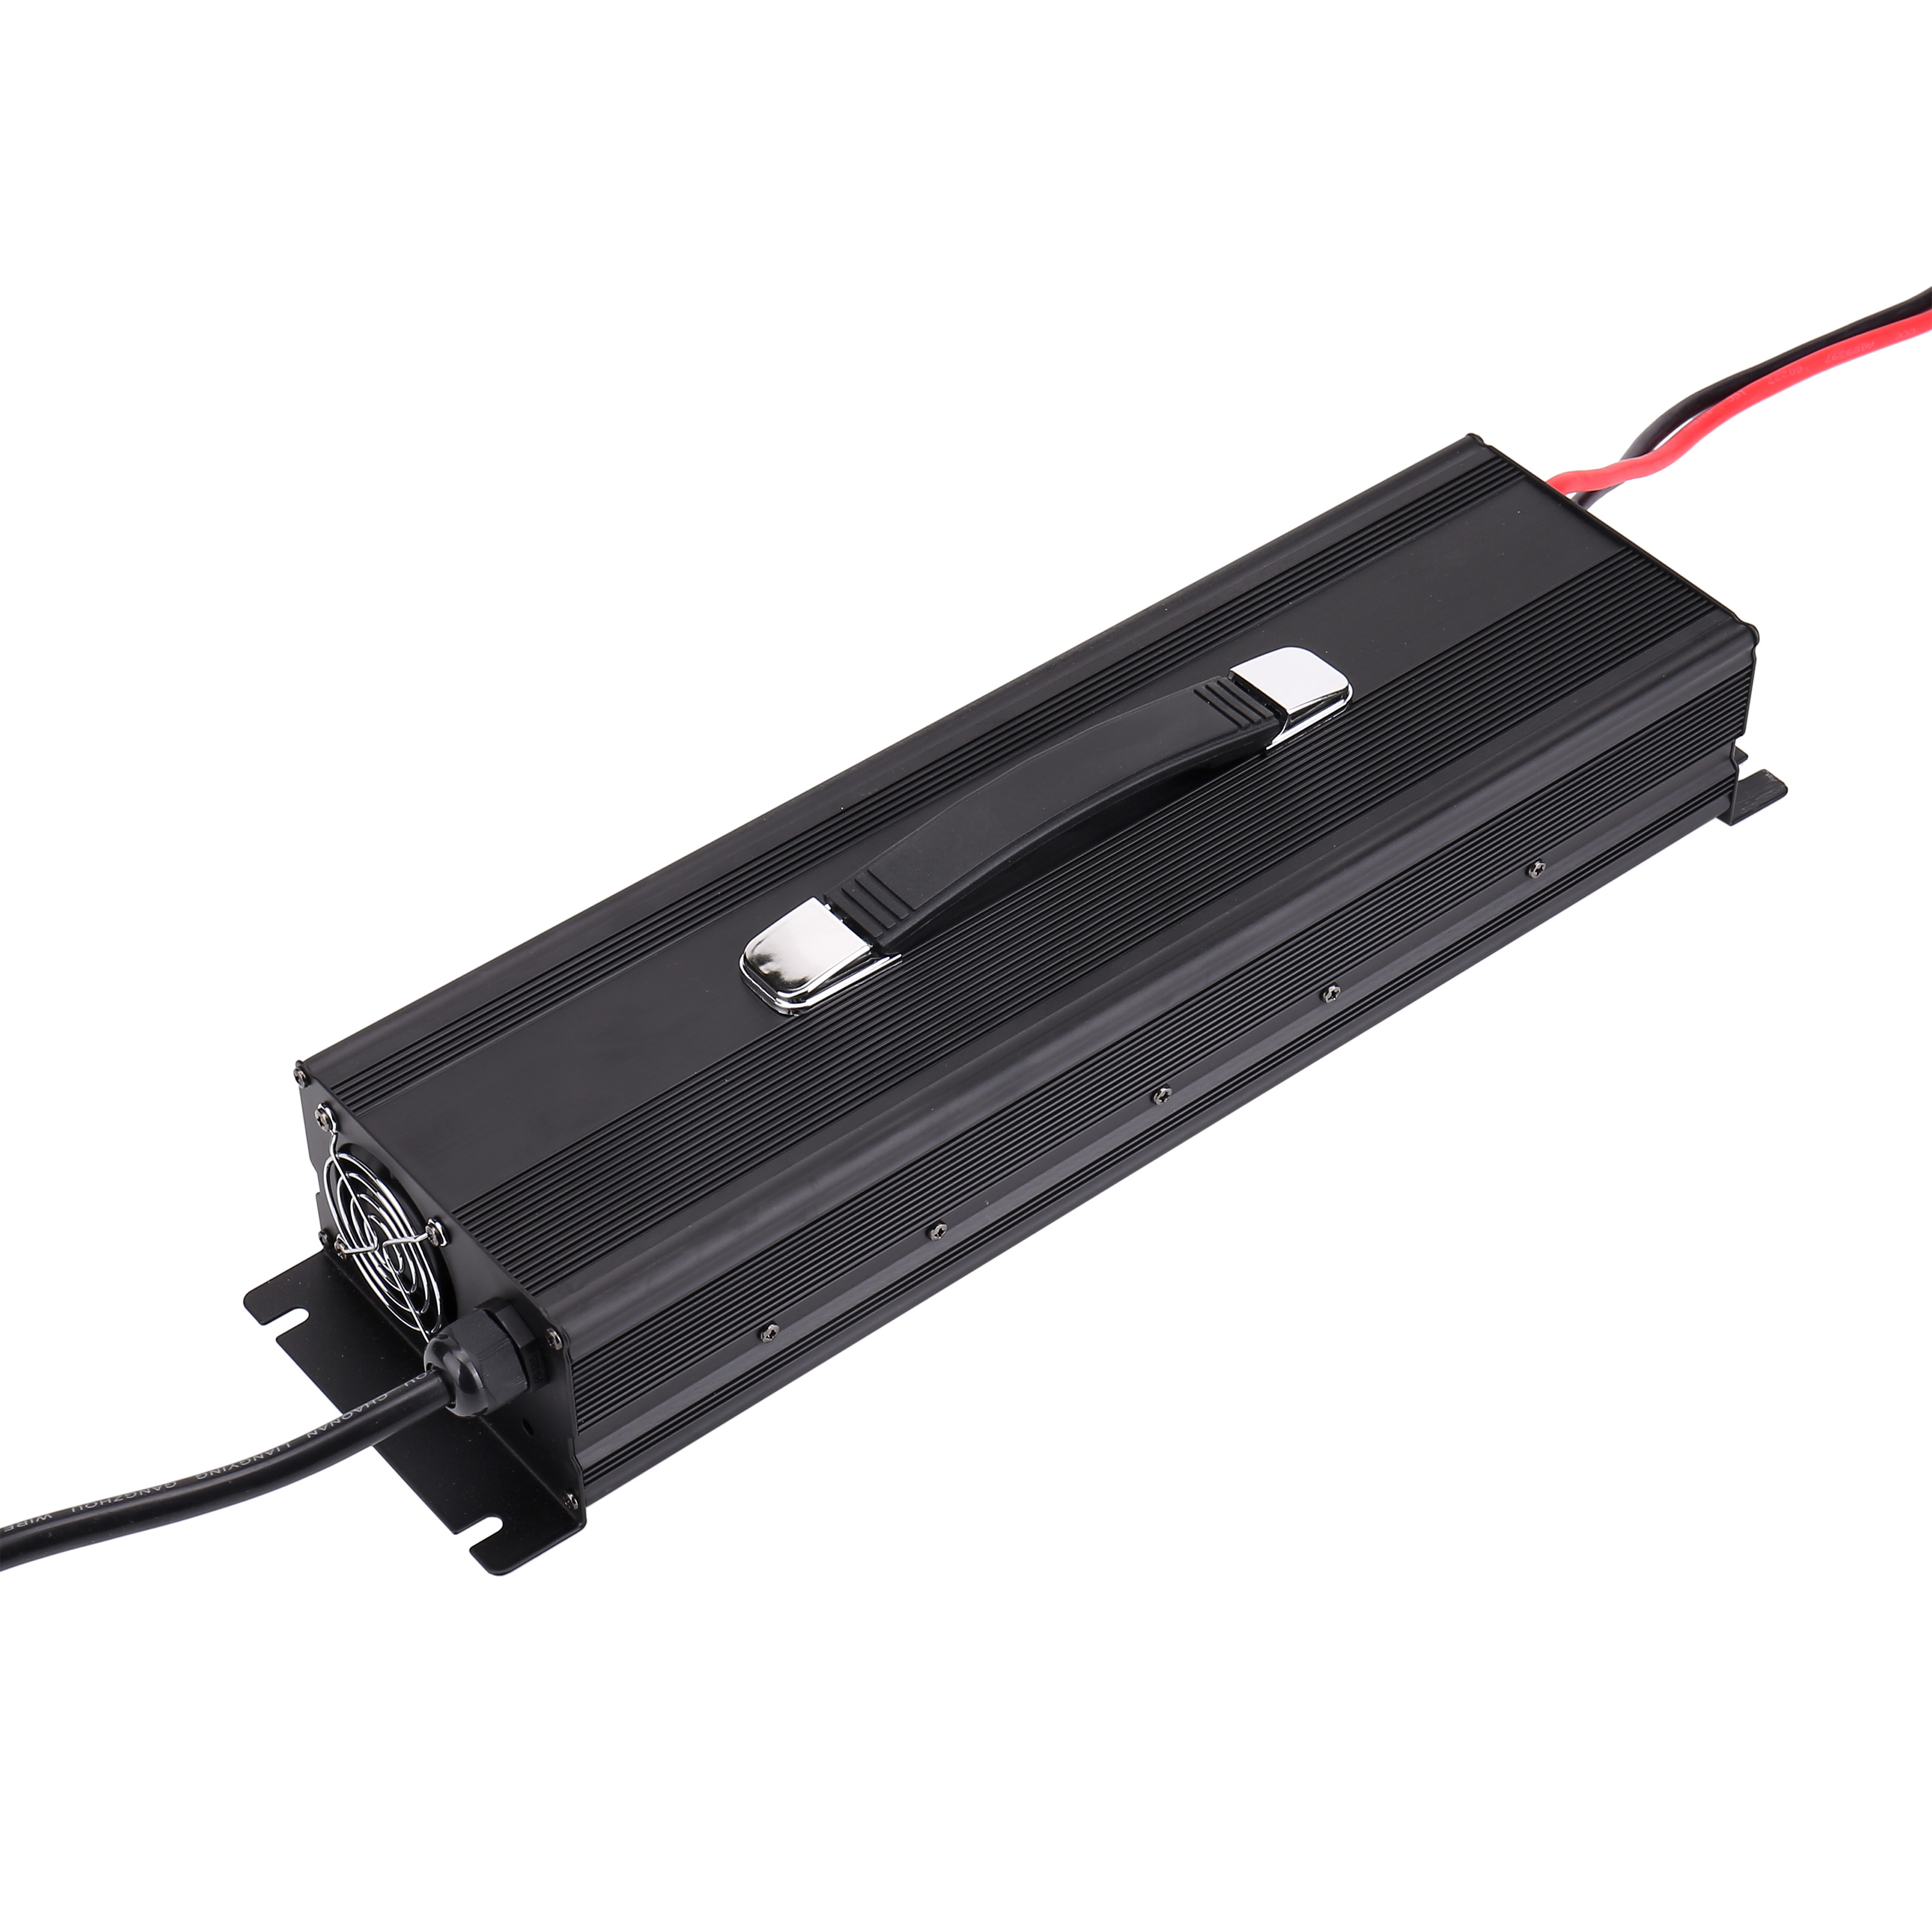 24S 84V smart charger for 84V LI-ION battery pack support CC/CV  - 副本